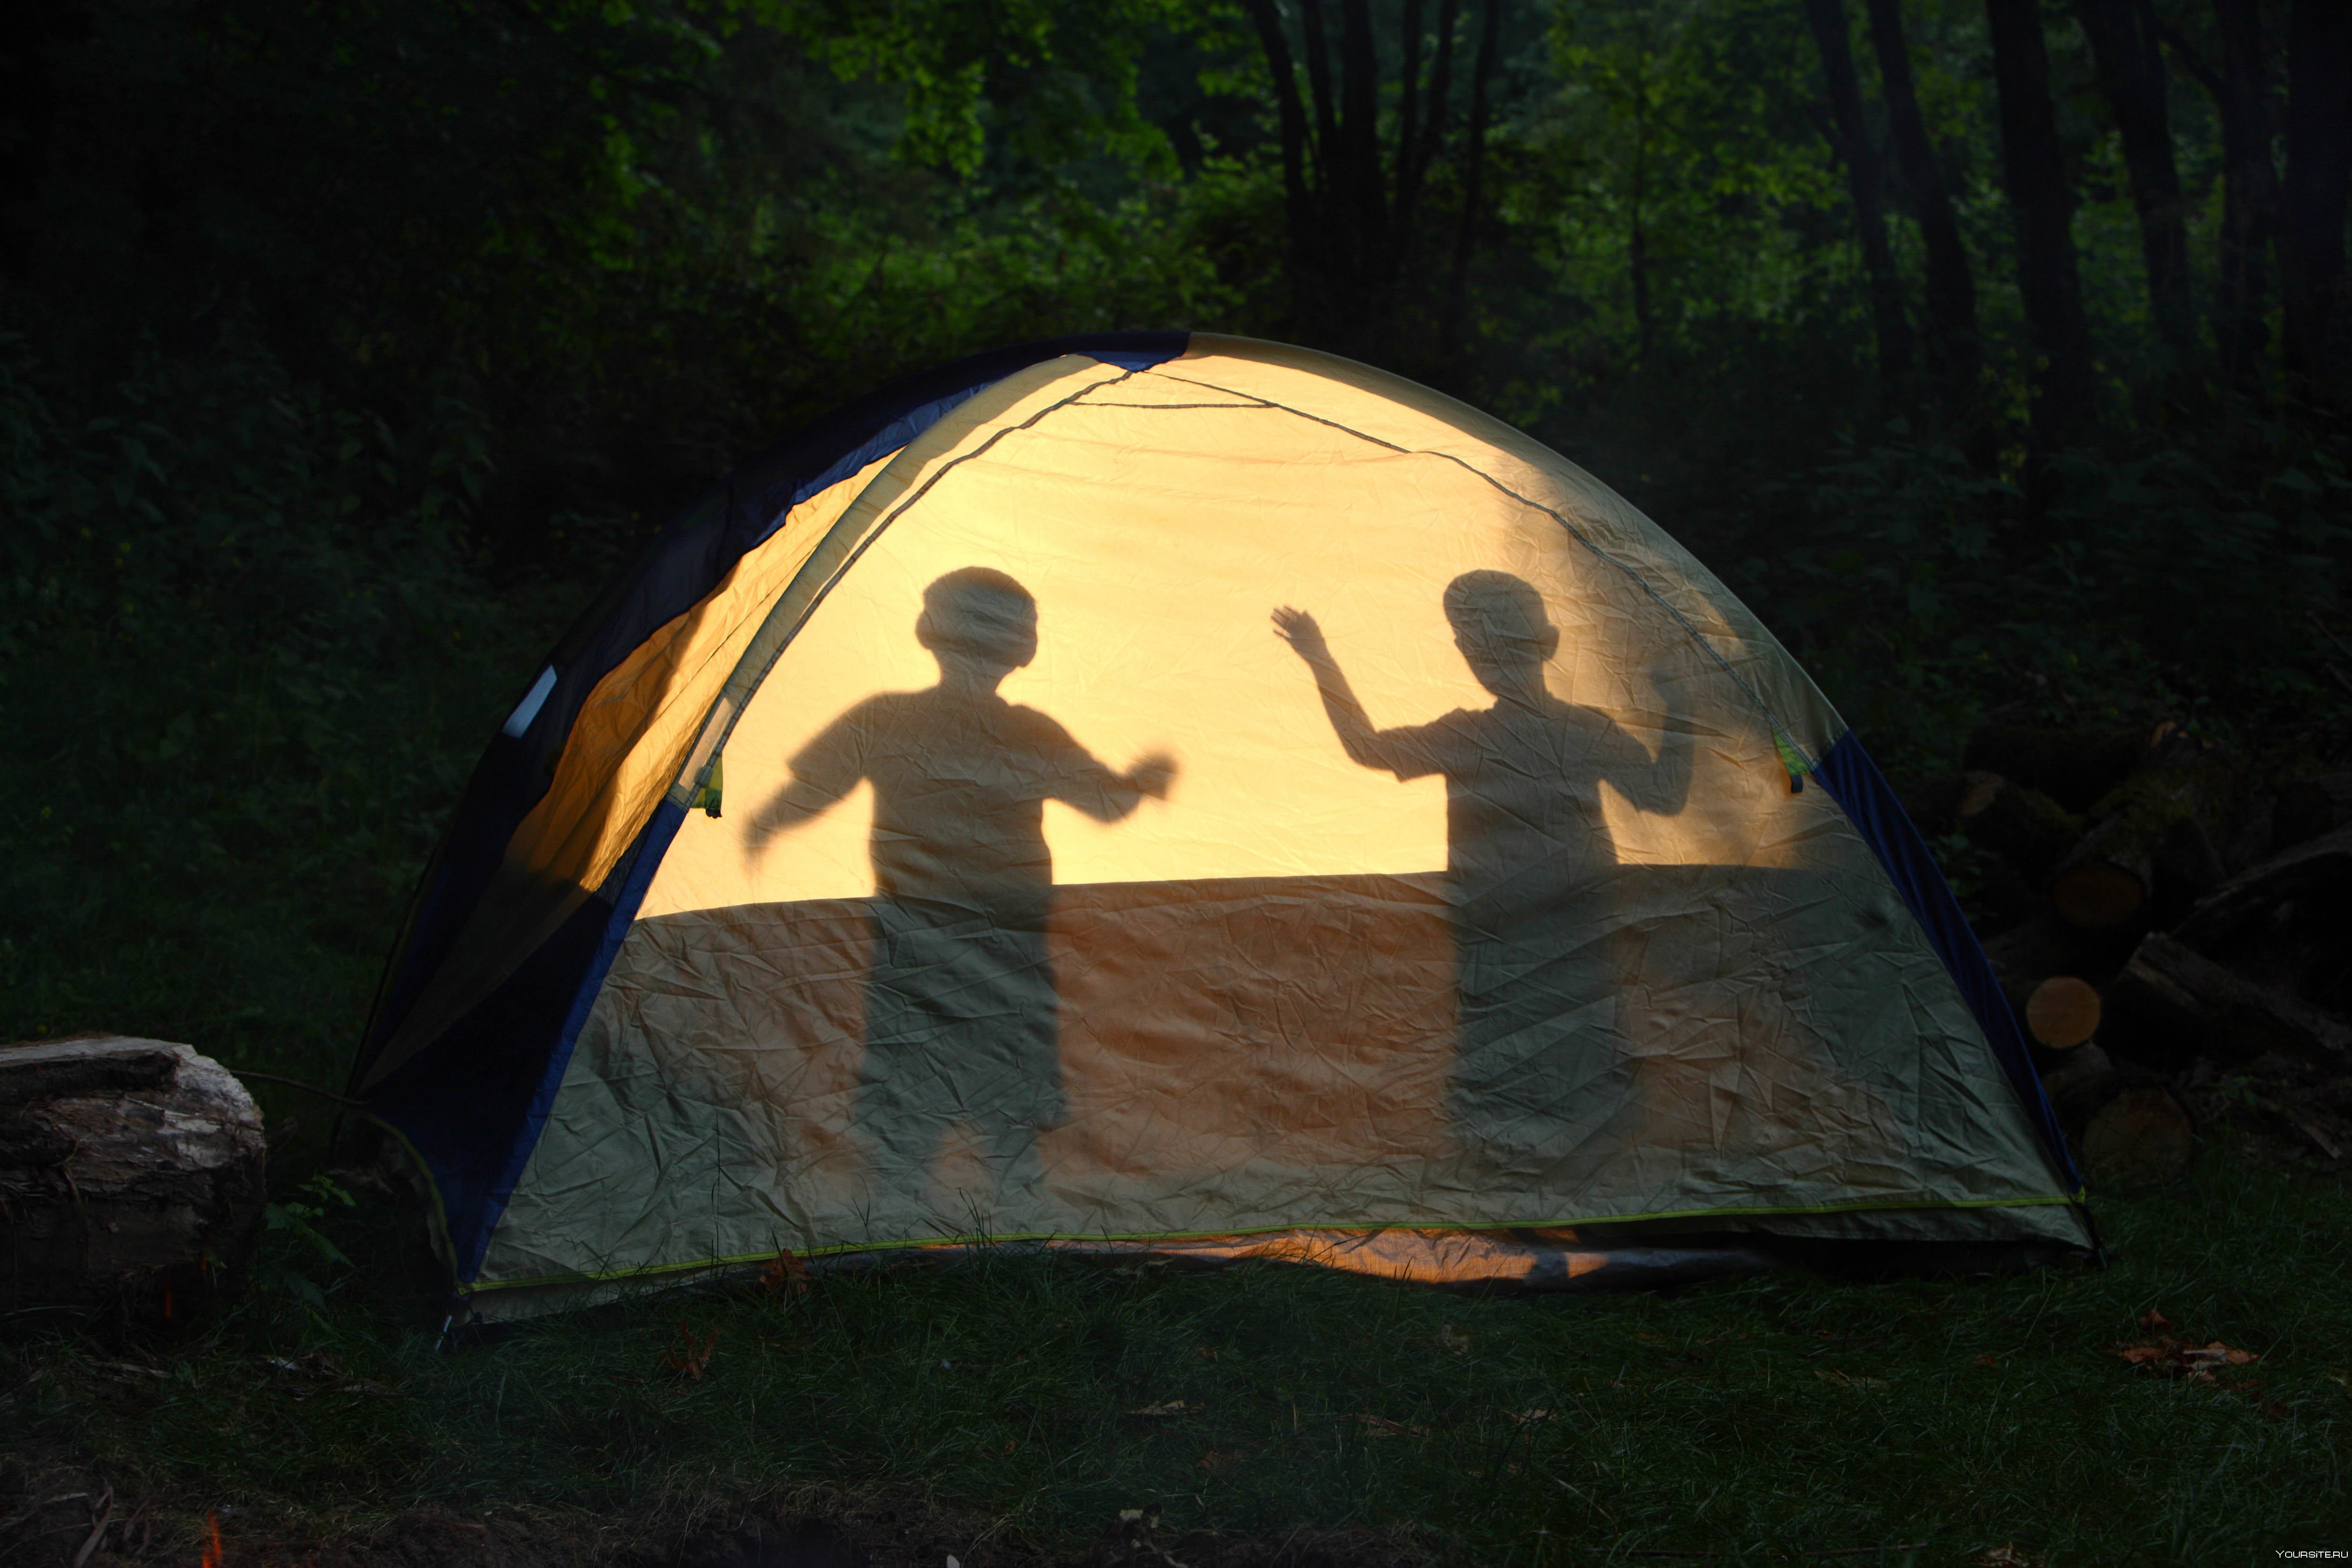 When we go camping. Палатка. Поход с палатками. Палатка силуэт. Поход с палатками с детьми.